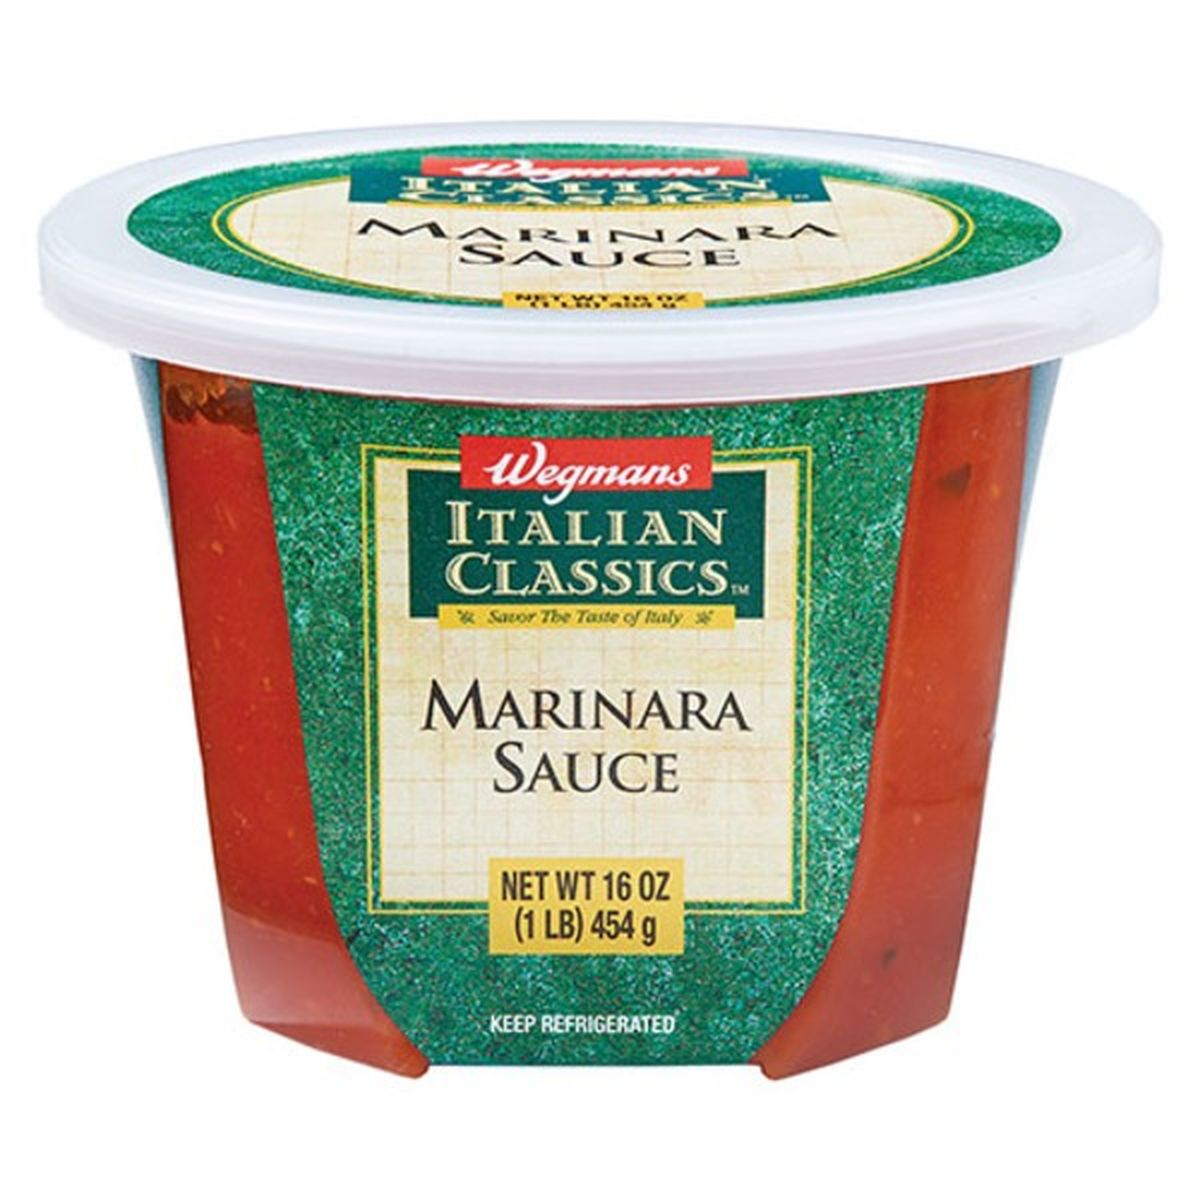 Calories in Wegmans Italian Classics Marinara Sauce